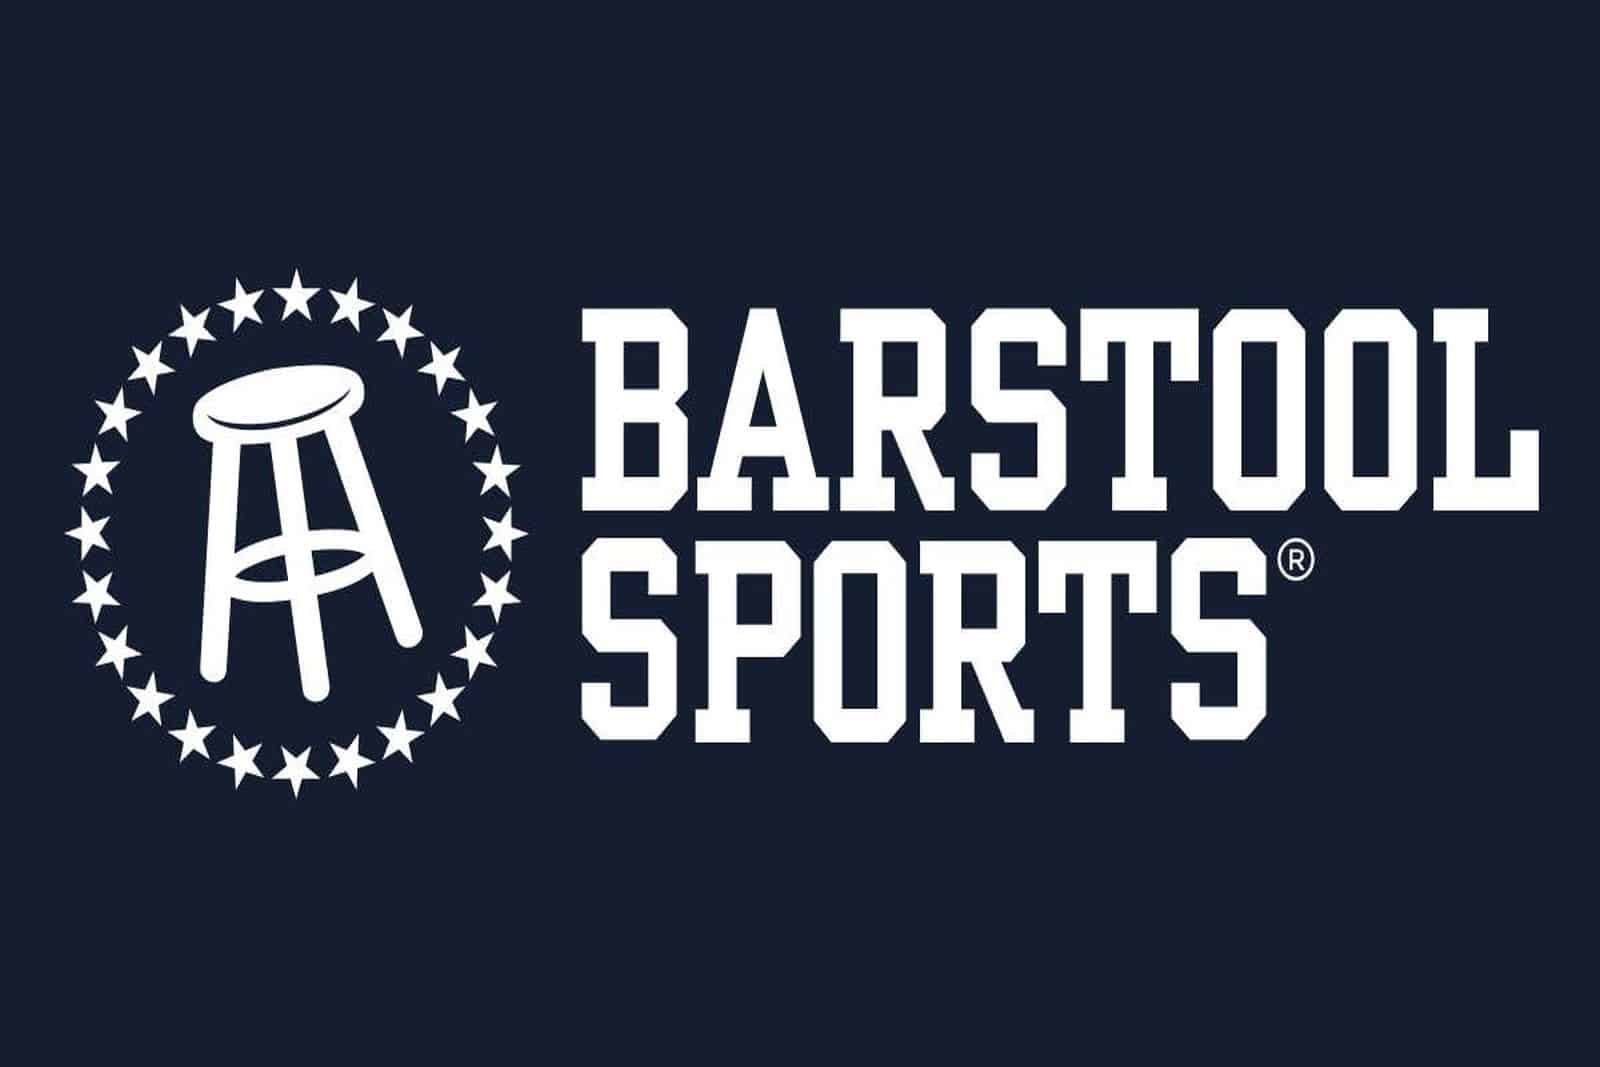 Barstool Sports is new Title Sponsor of Arizona Bowl